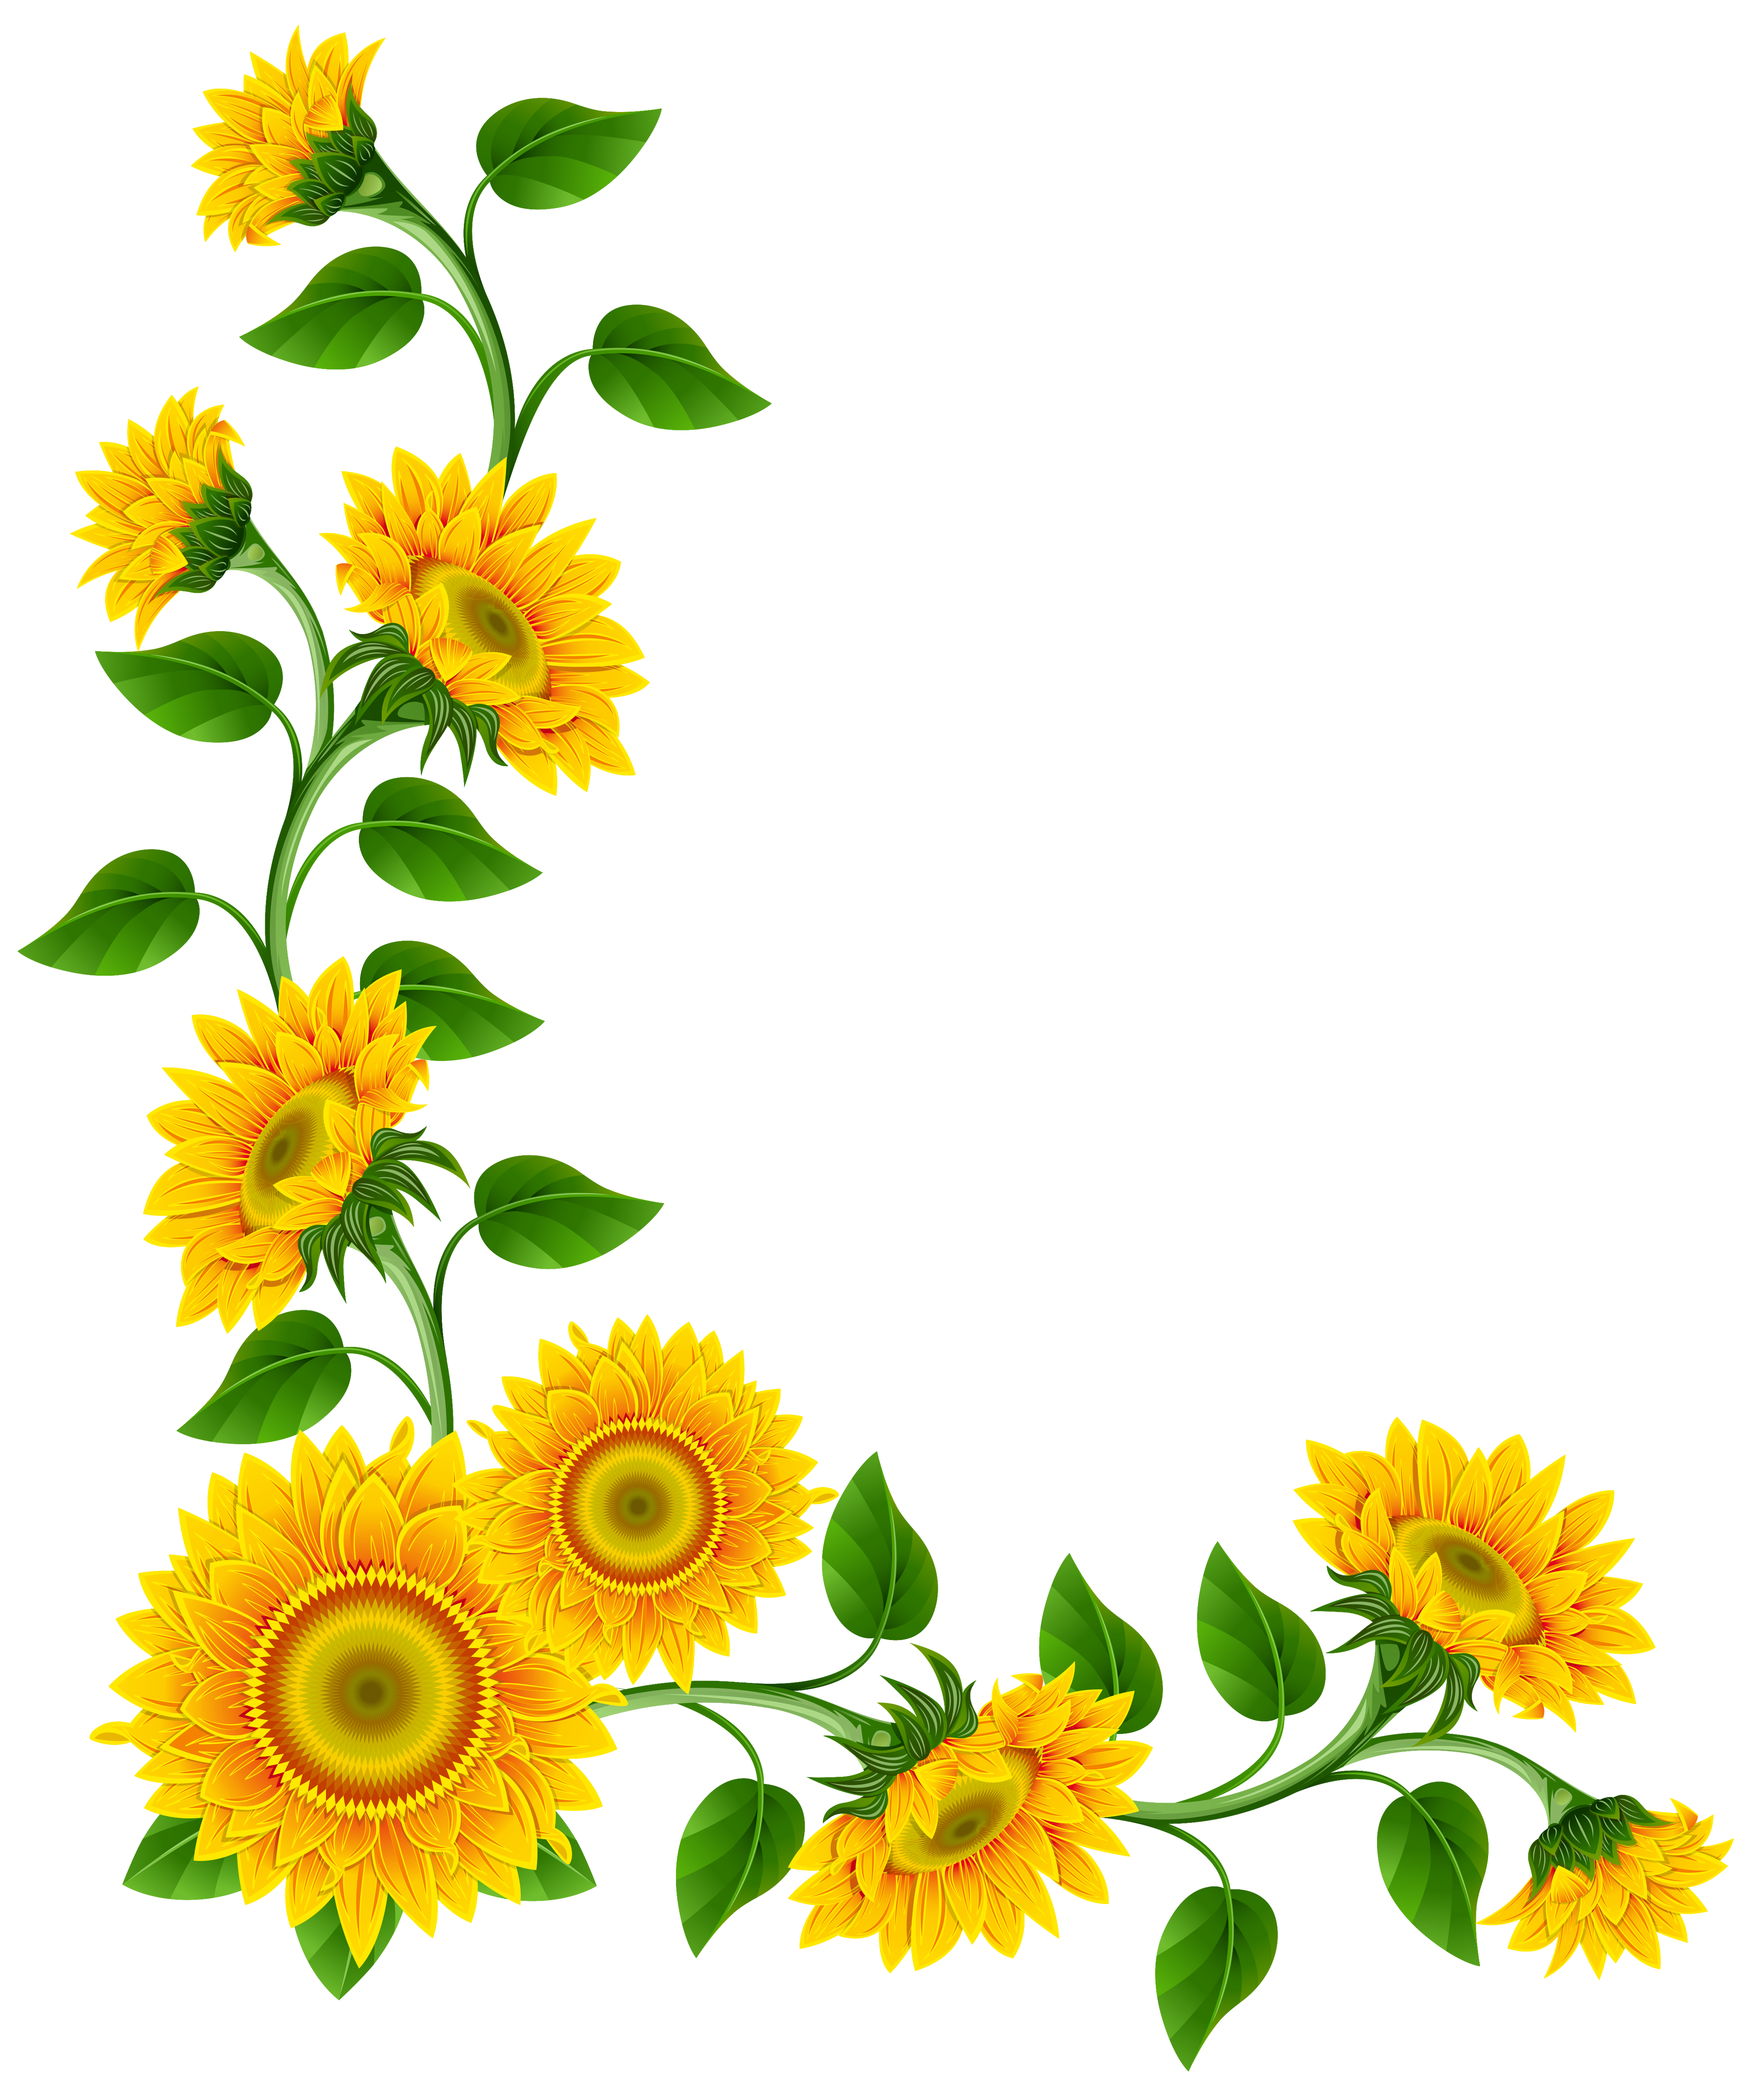 Sunflower Border Decoration PNG Clipart Image